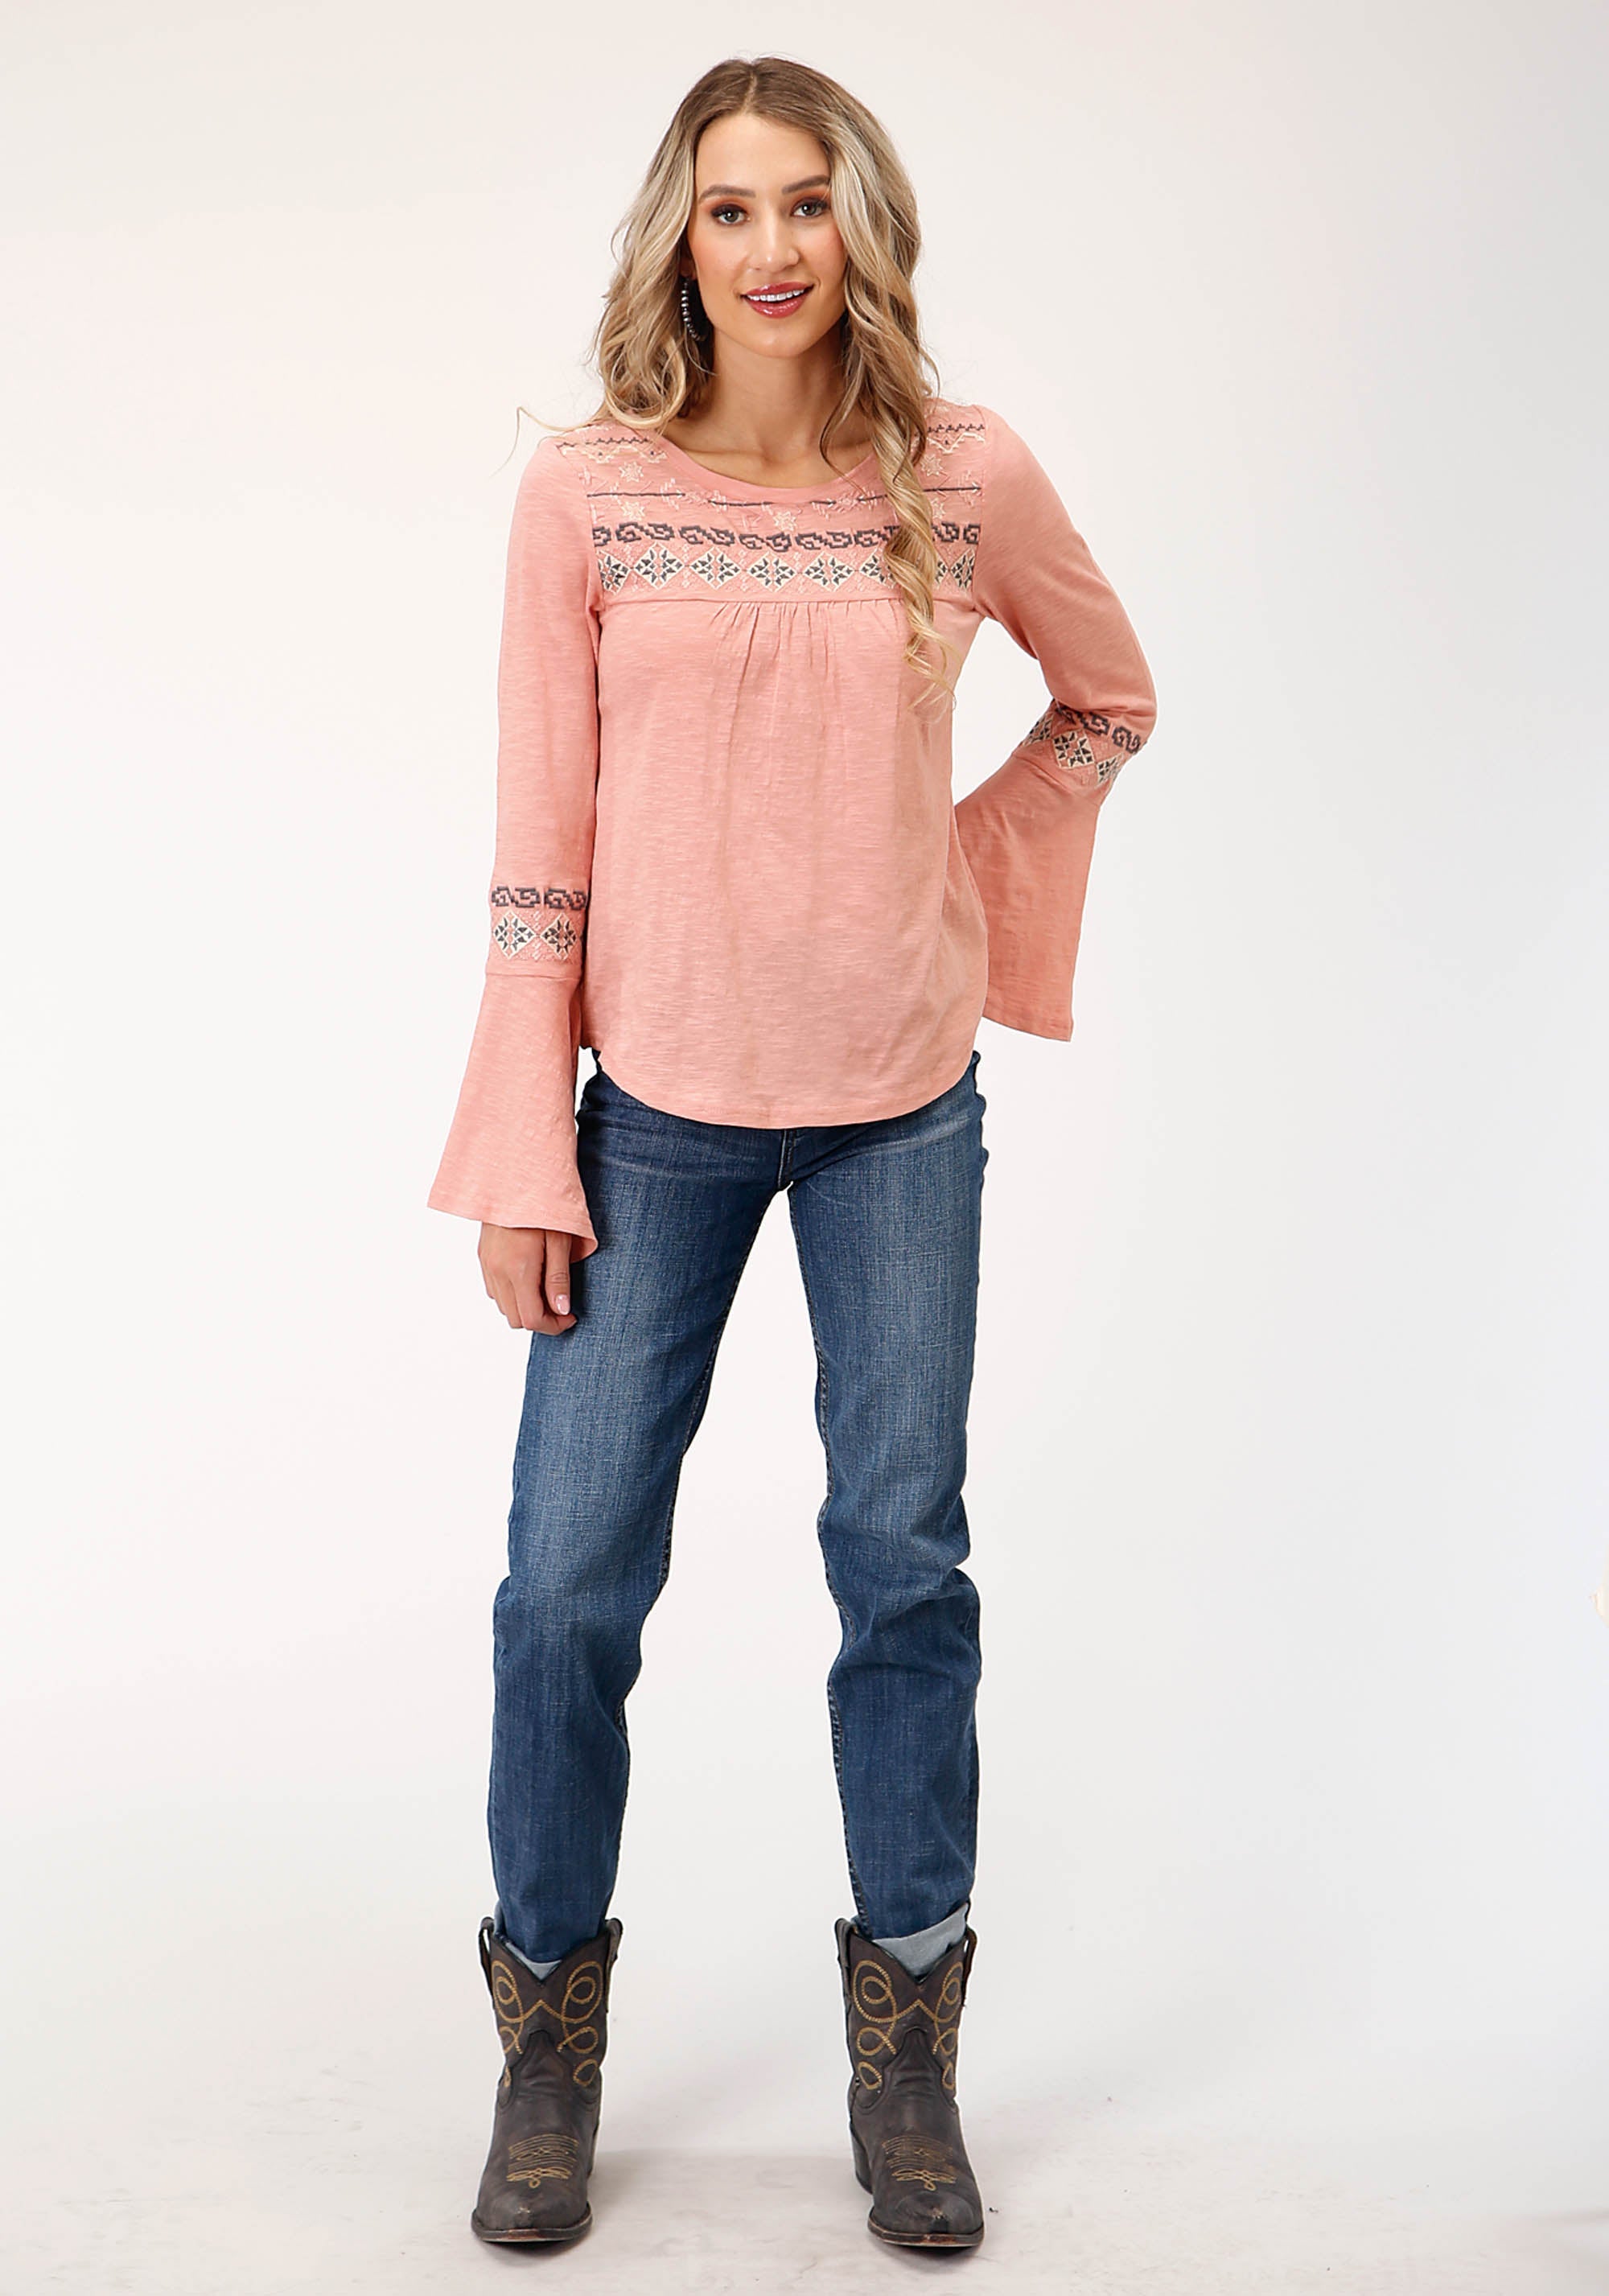 Roper Womens Long Sleeve Knit Light Pink Slub Knit Jersey Top